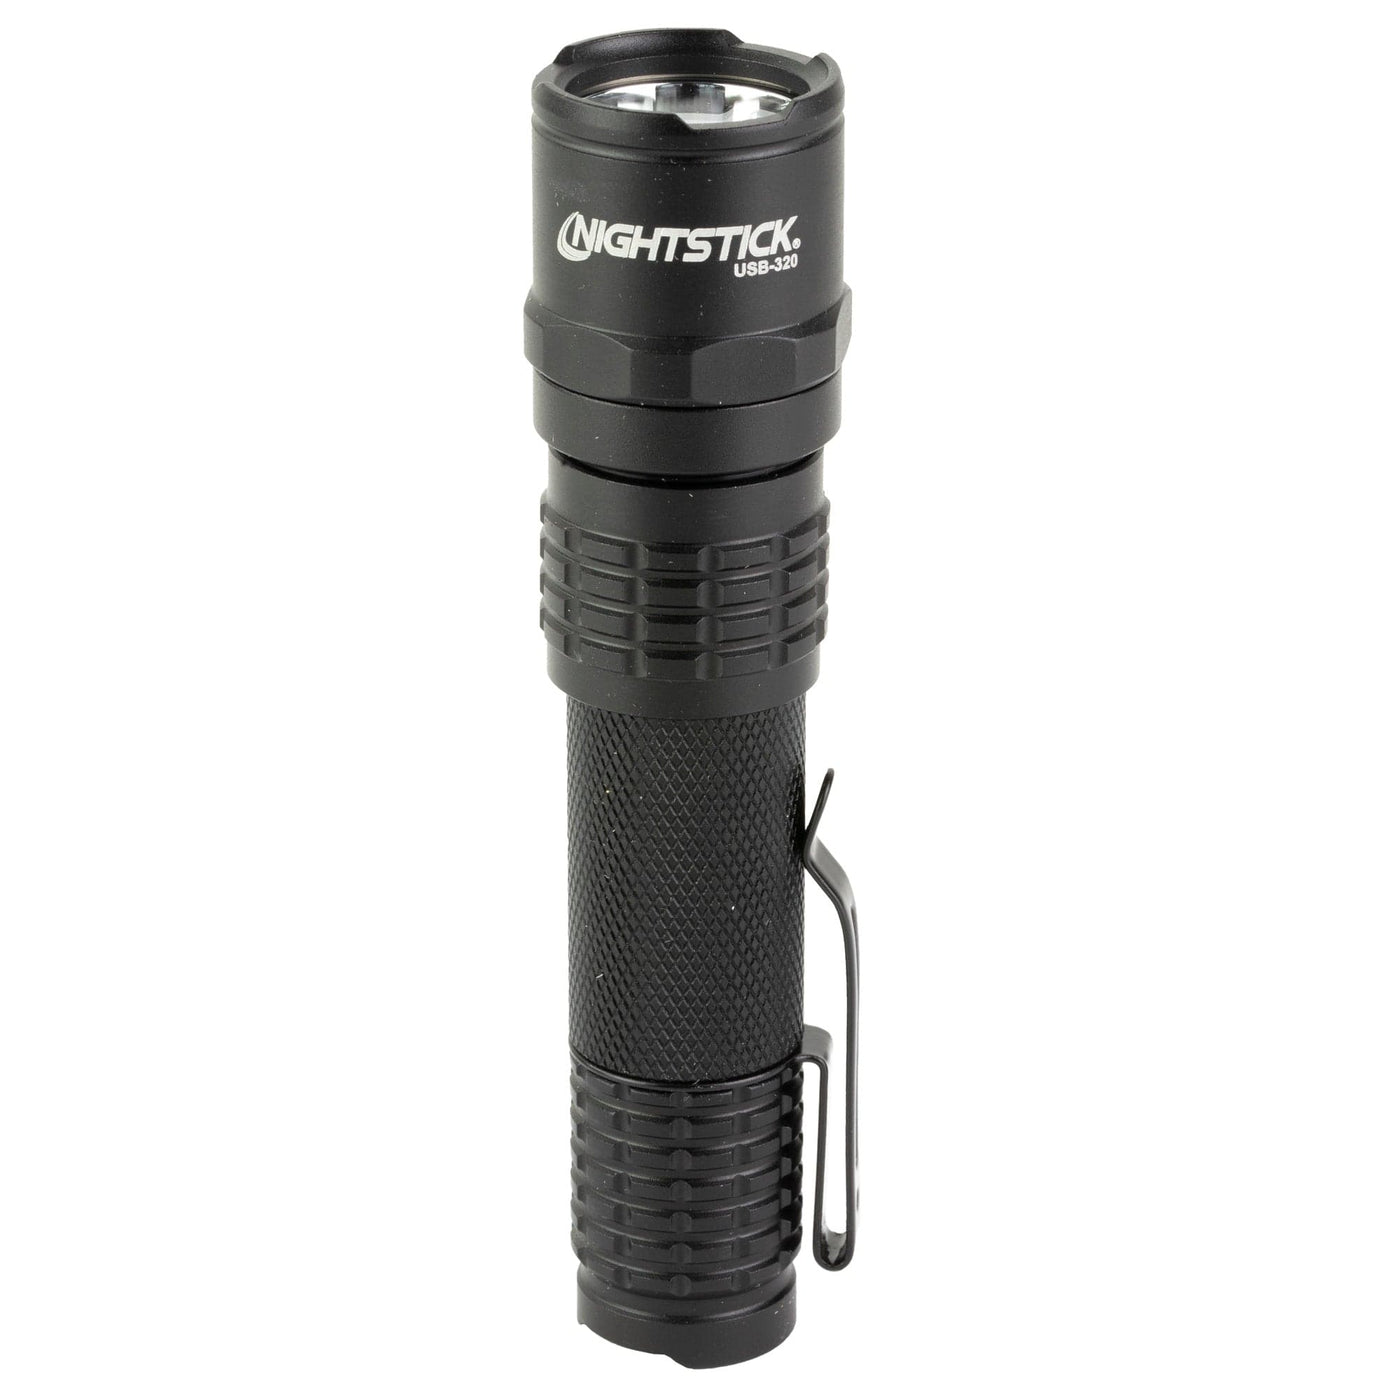 Nightstick Nightstick Tactical Rechargeable Flashlight Black 900 Lumens Usb 900 lumen General Hunting Accessories